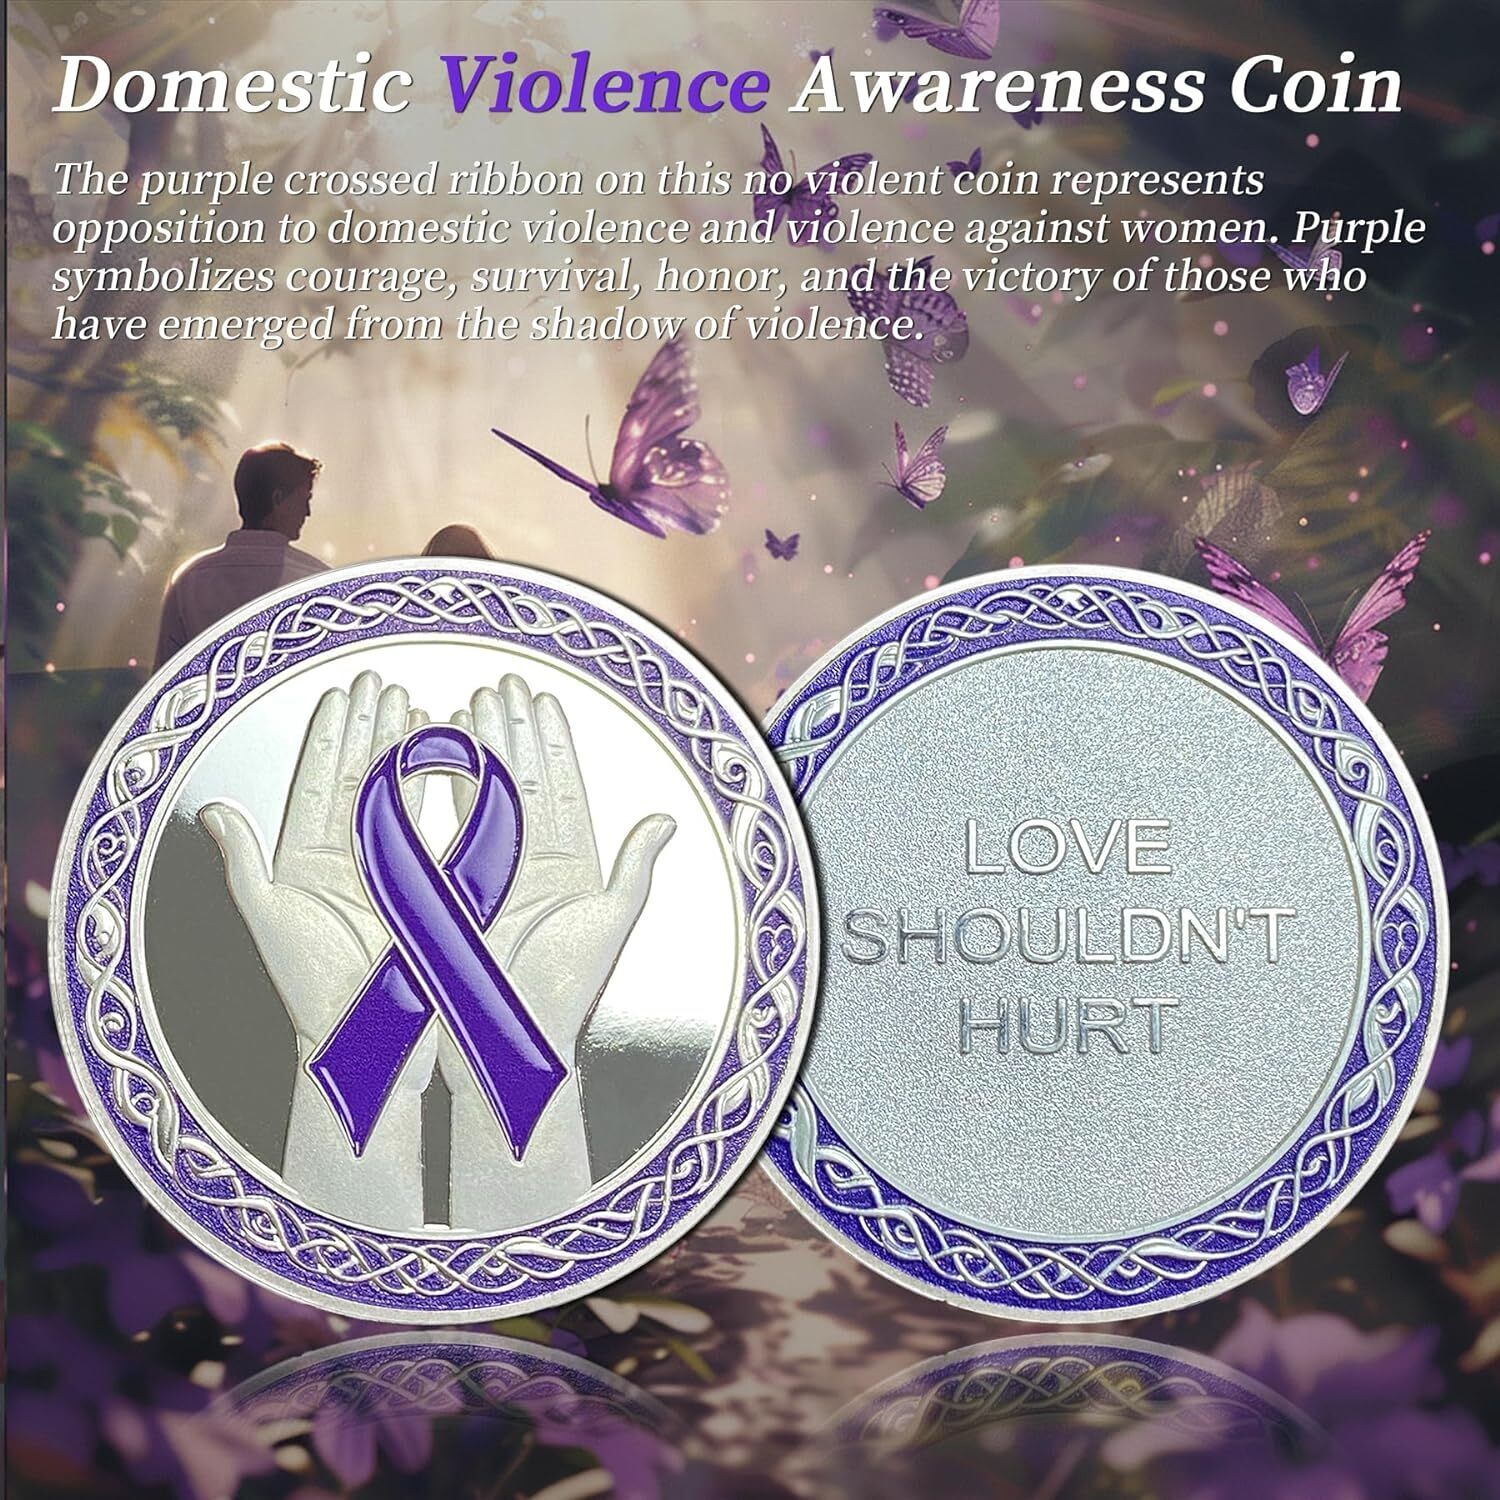 Domestic Violence Awareness Coin Original Purple Ribbon Coins Stop Violence